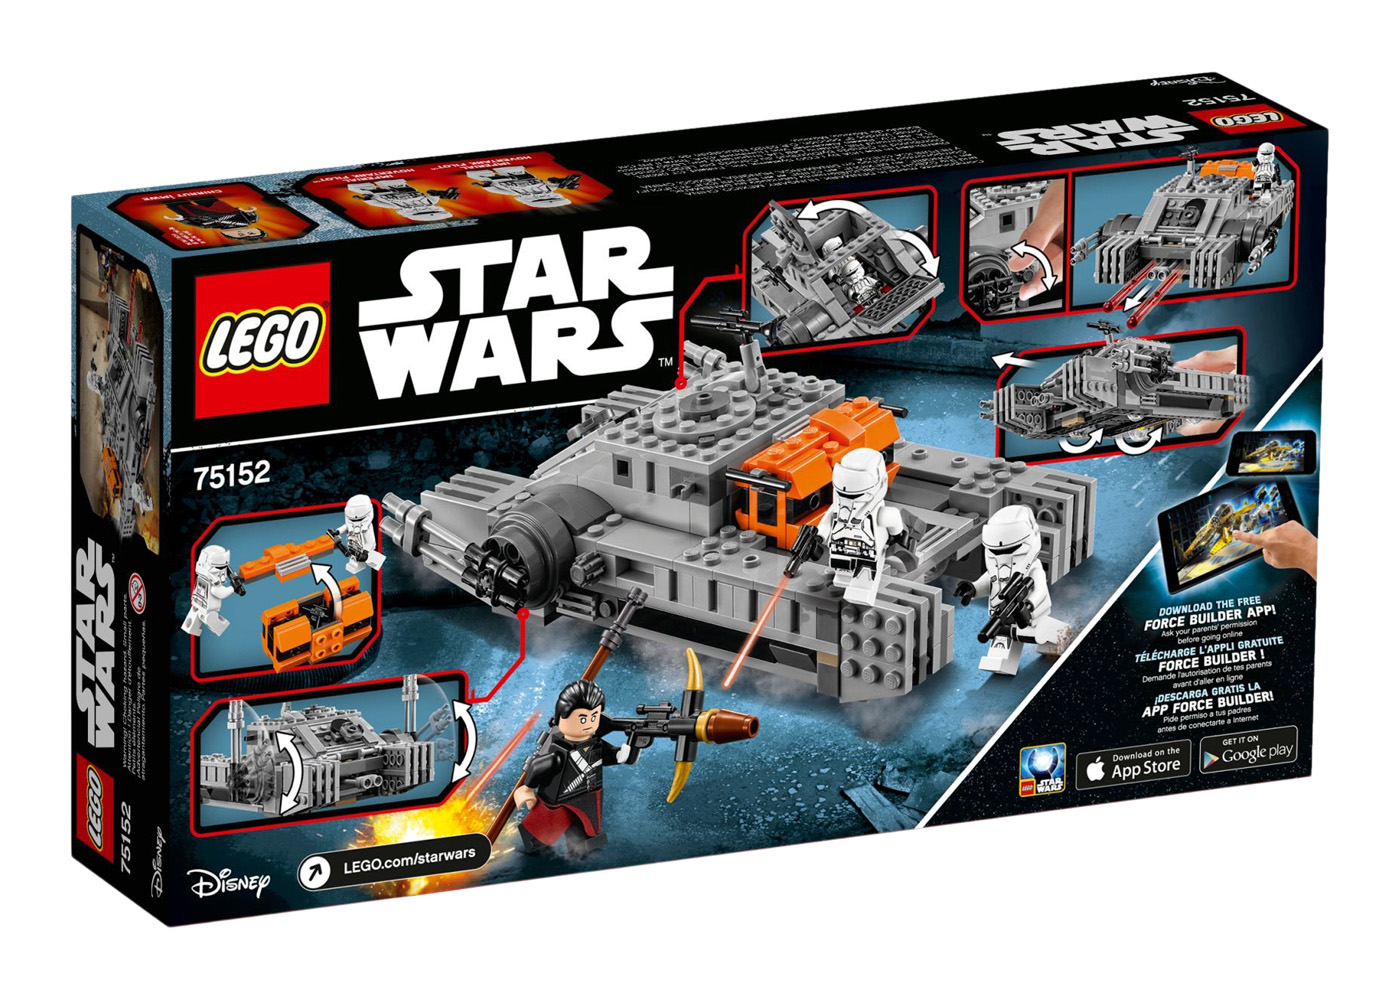 LEGO Star Wars Midi-scale Imperial Star Destroyer Set 8099 - JP